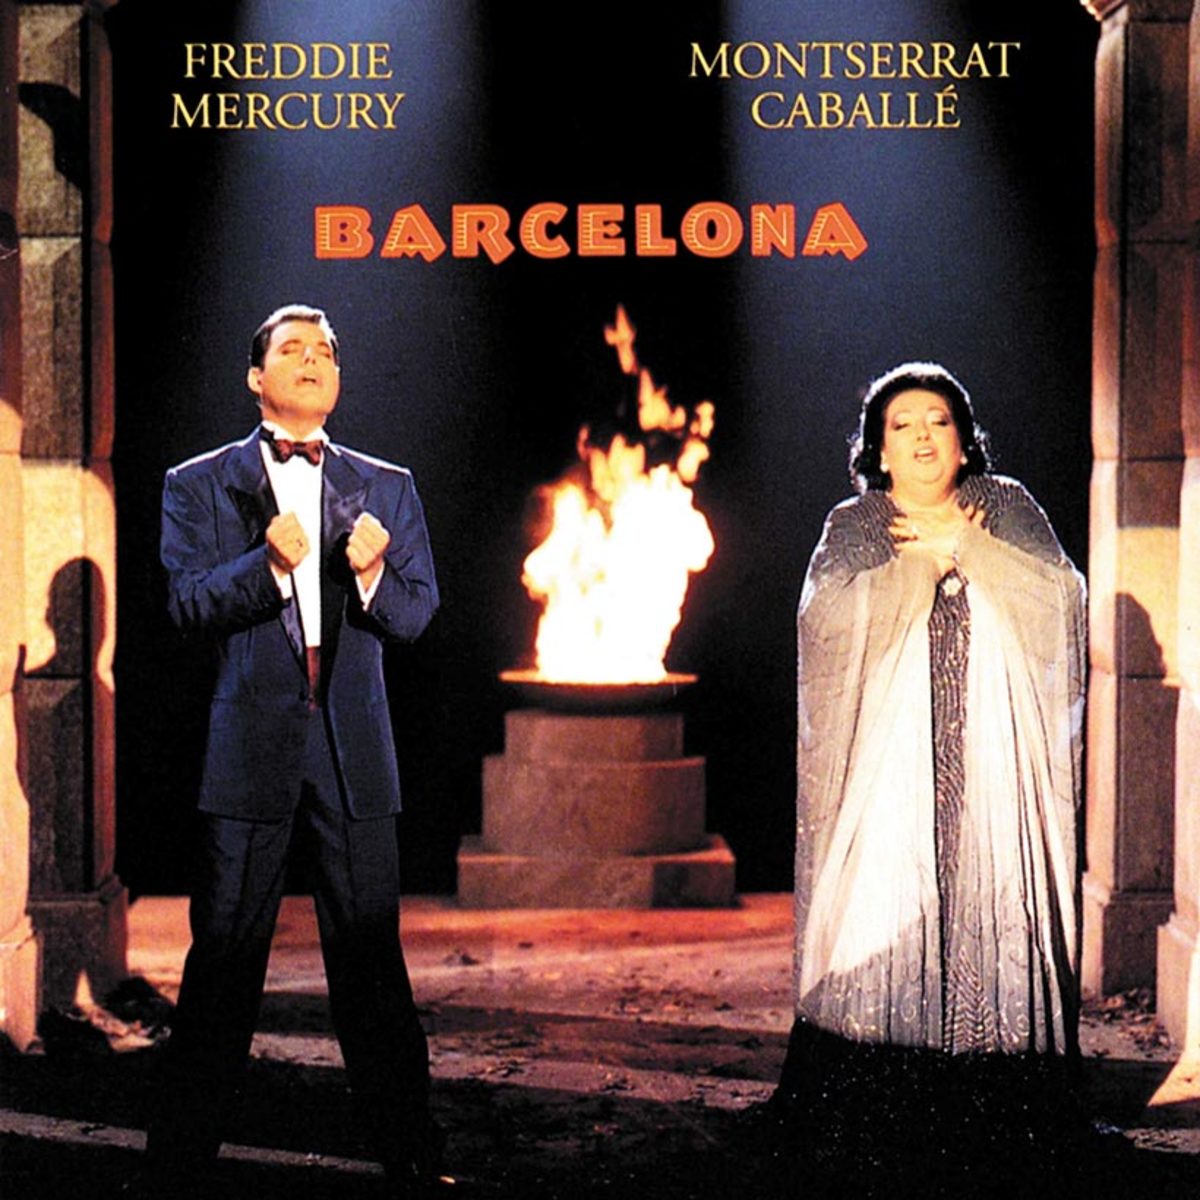 Freddie Mercury and Montserrat Caballé on the cover of 1988's "Barcelona" album.